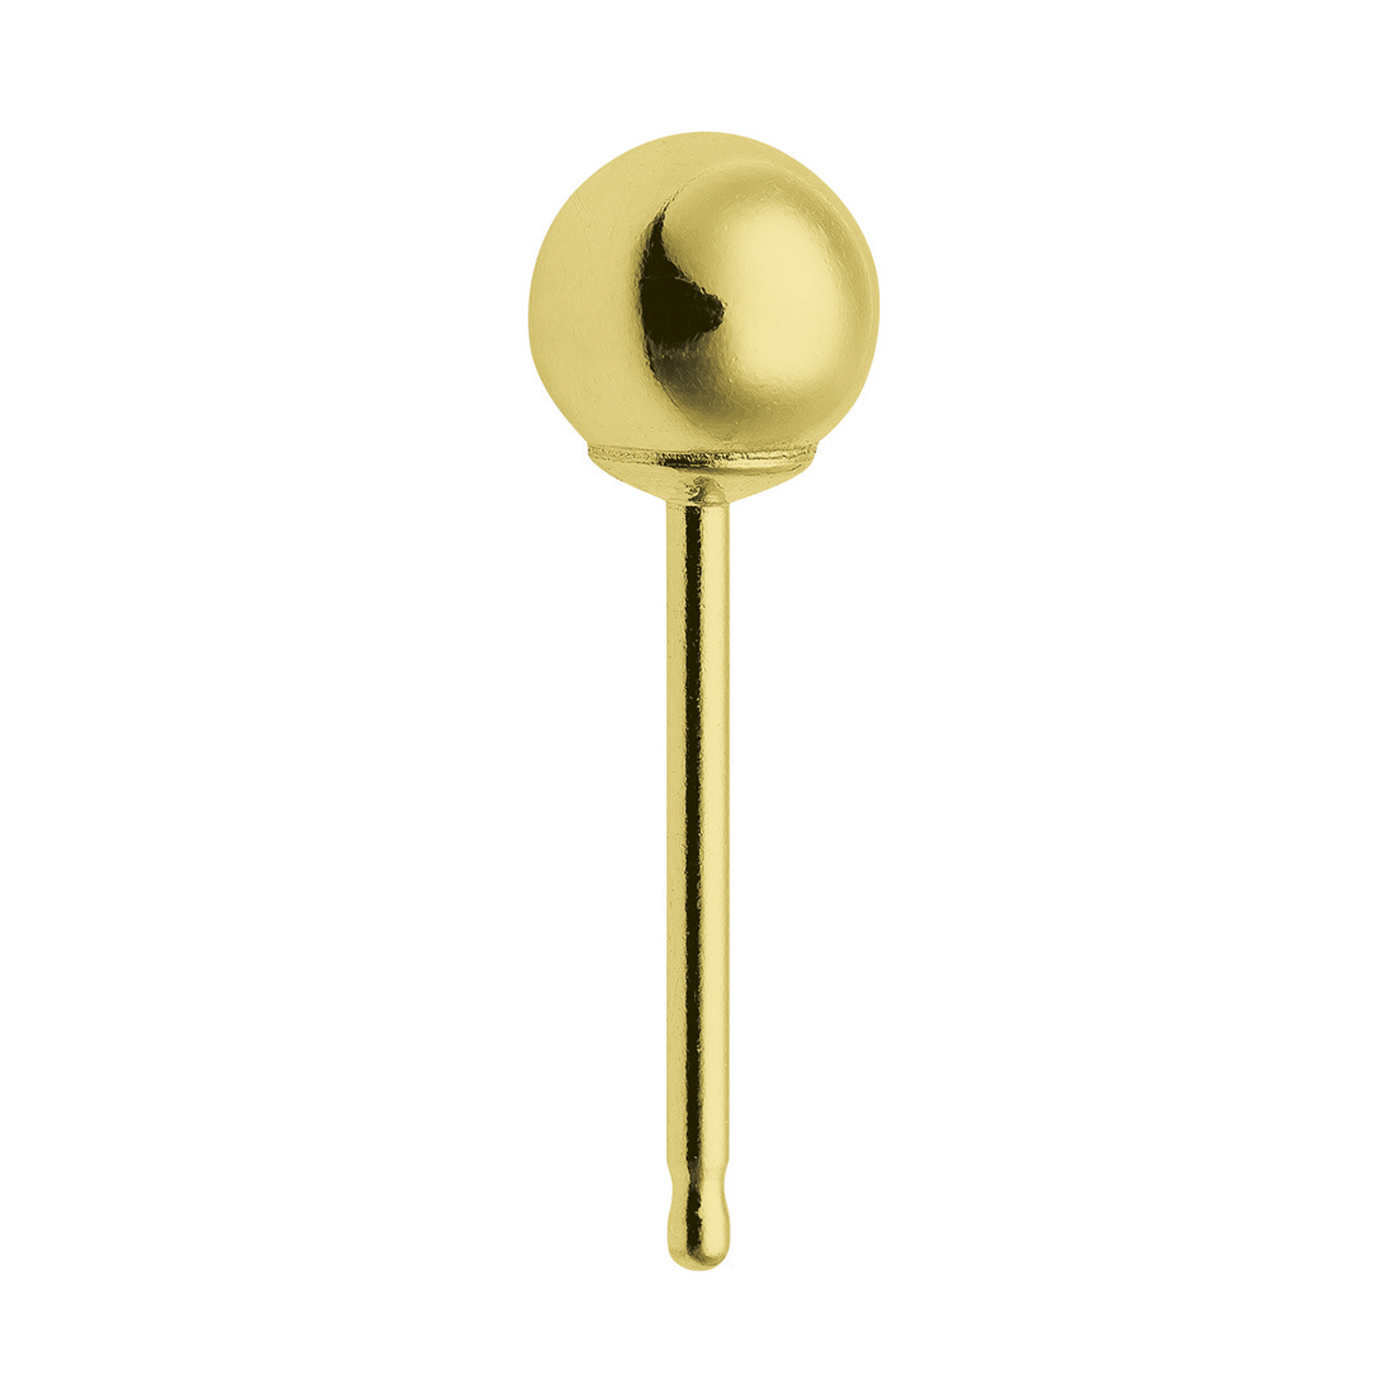 Ball Stud, Rolled Gold, ø 4 mm - 1 piece